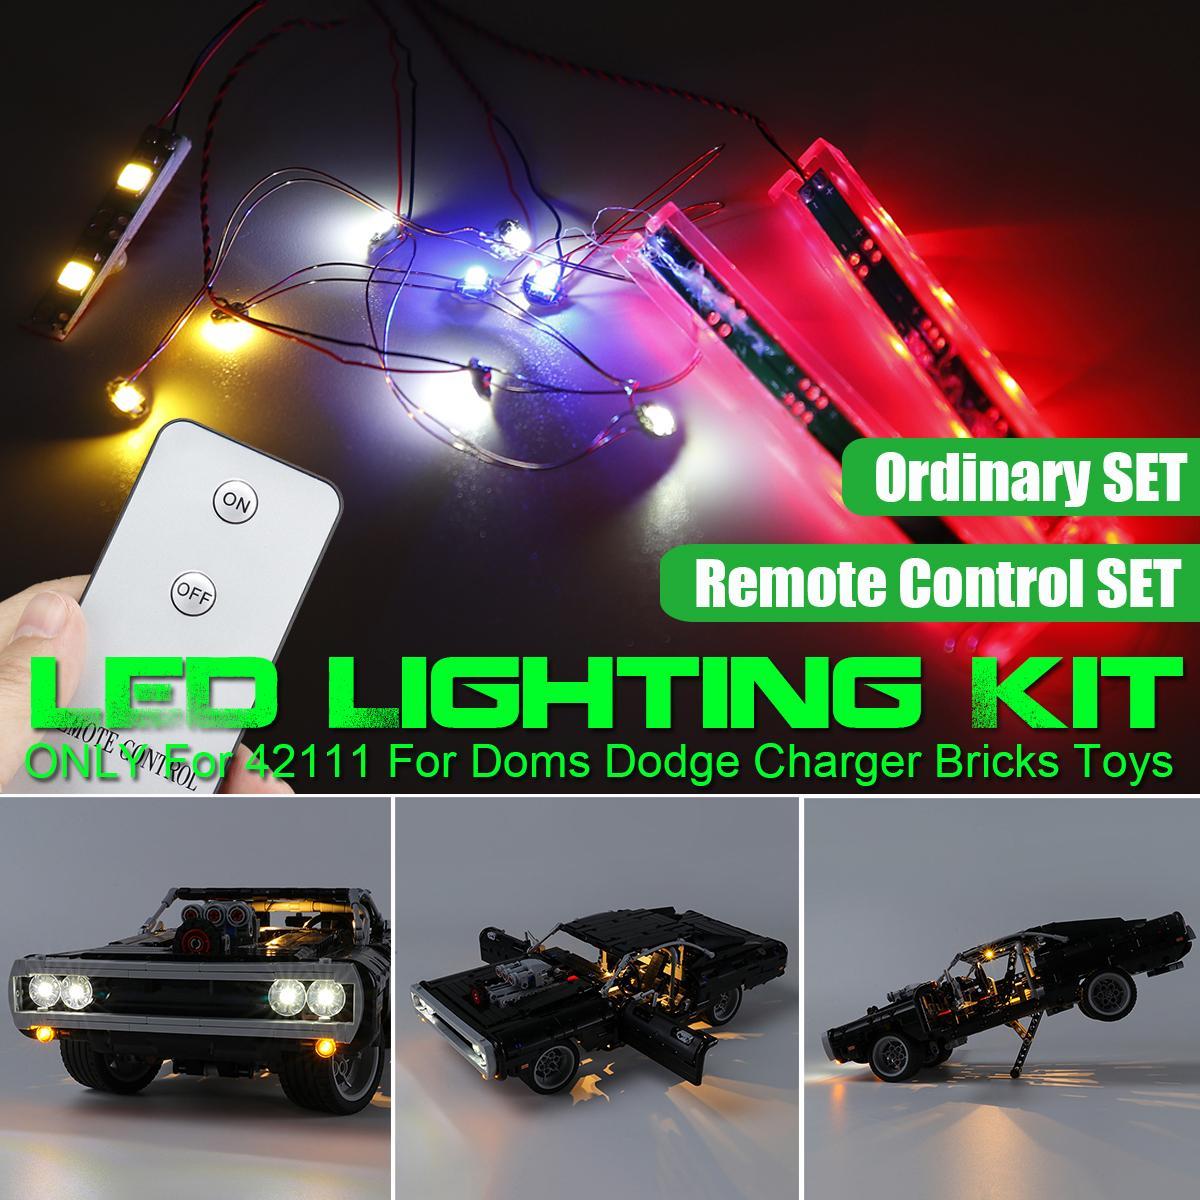 LED Light Lighting Kit Only for LEGO 42111 for Doms Dodge Charger Car Bricks Toy